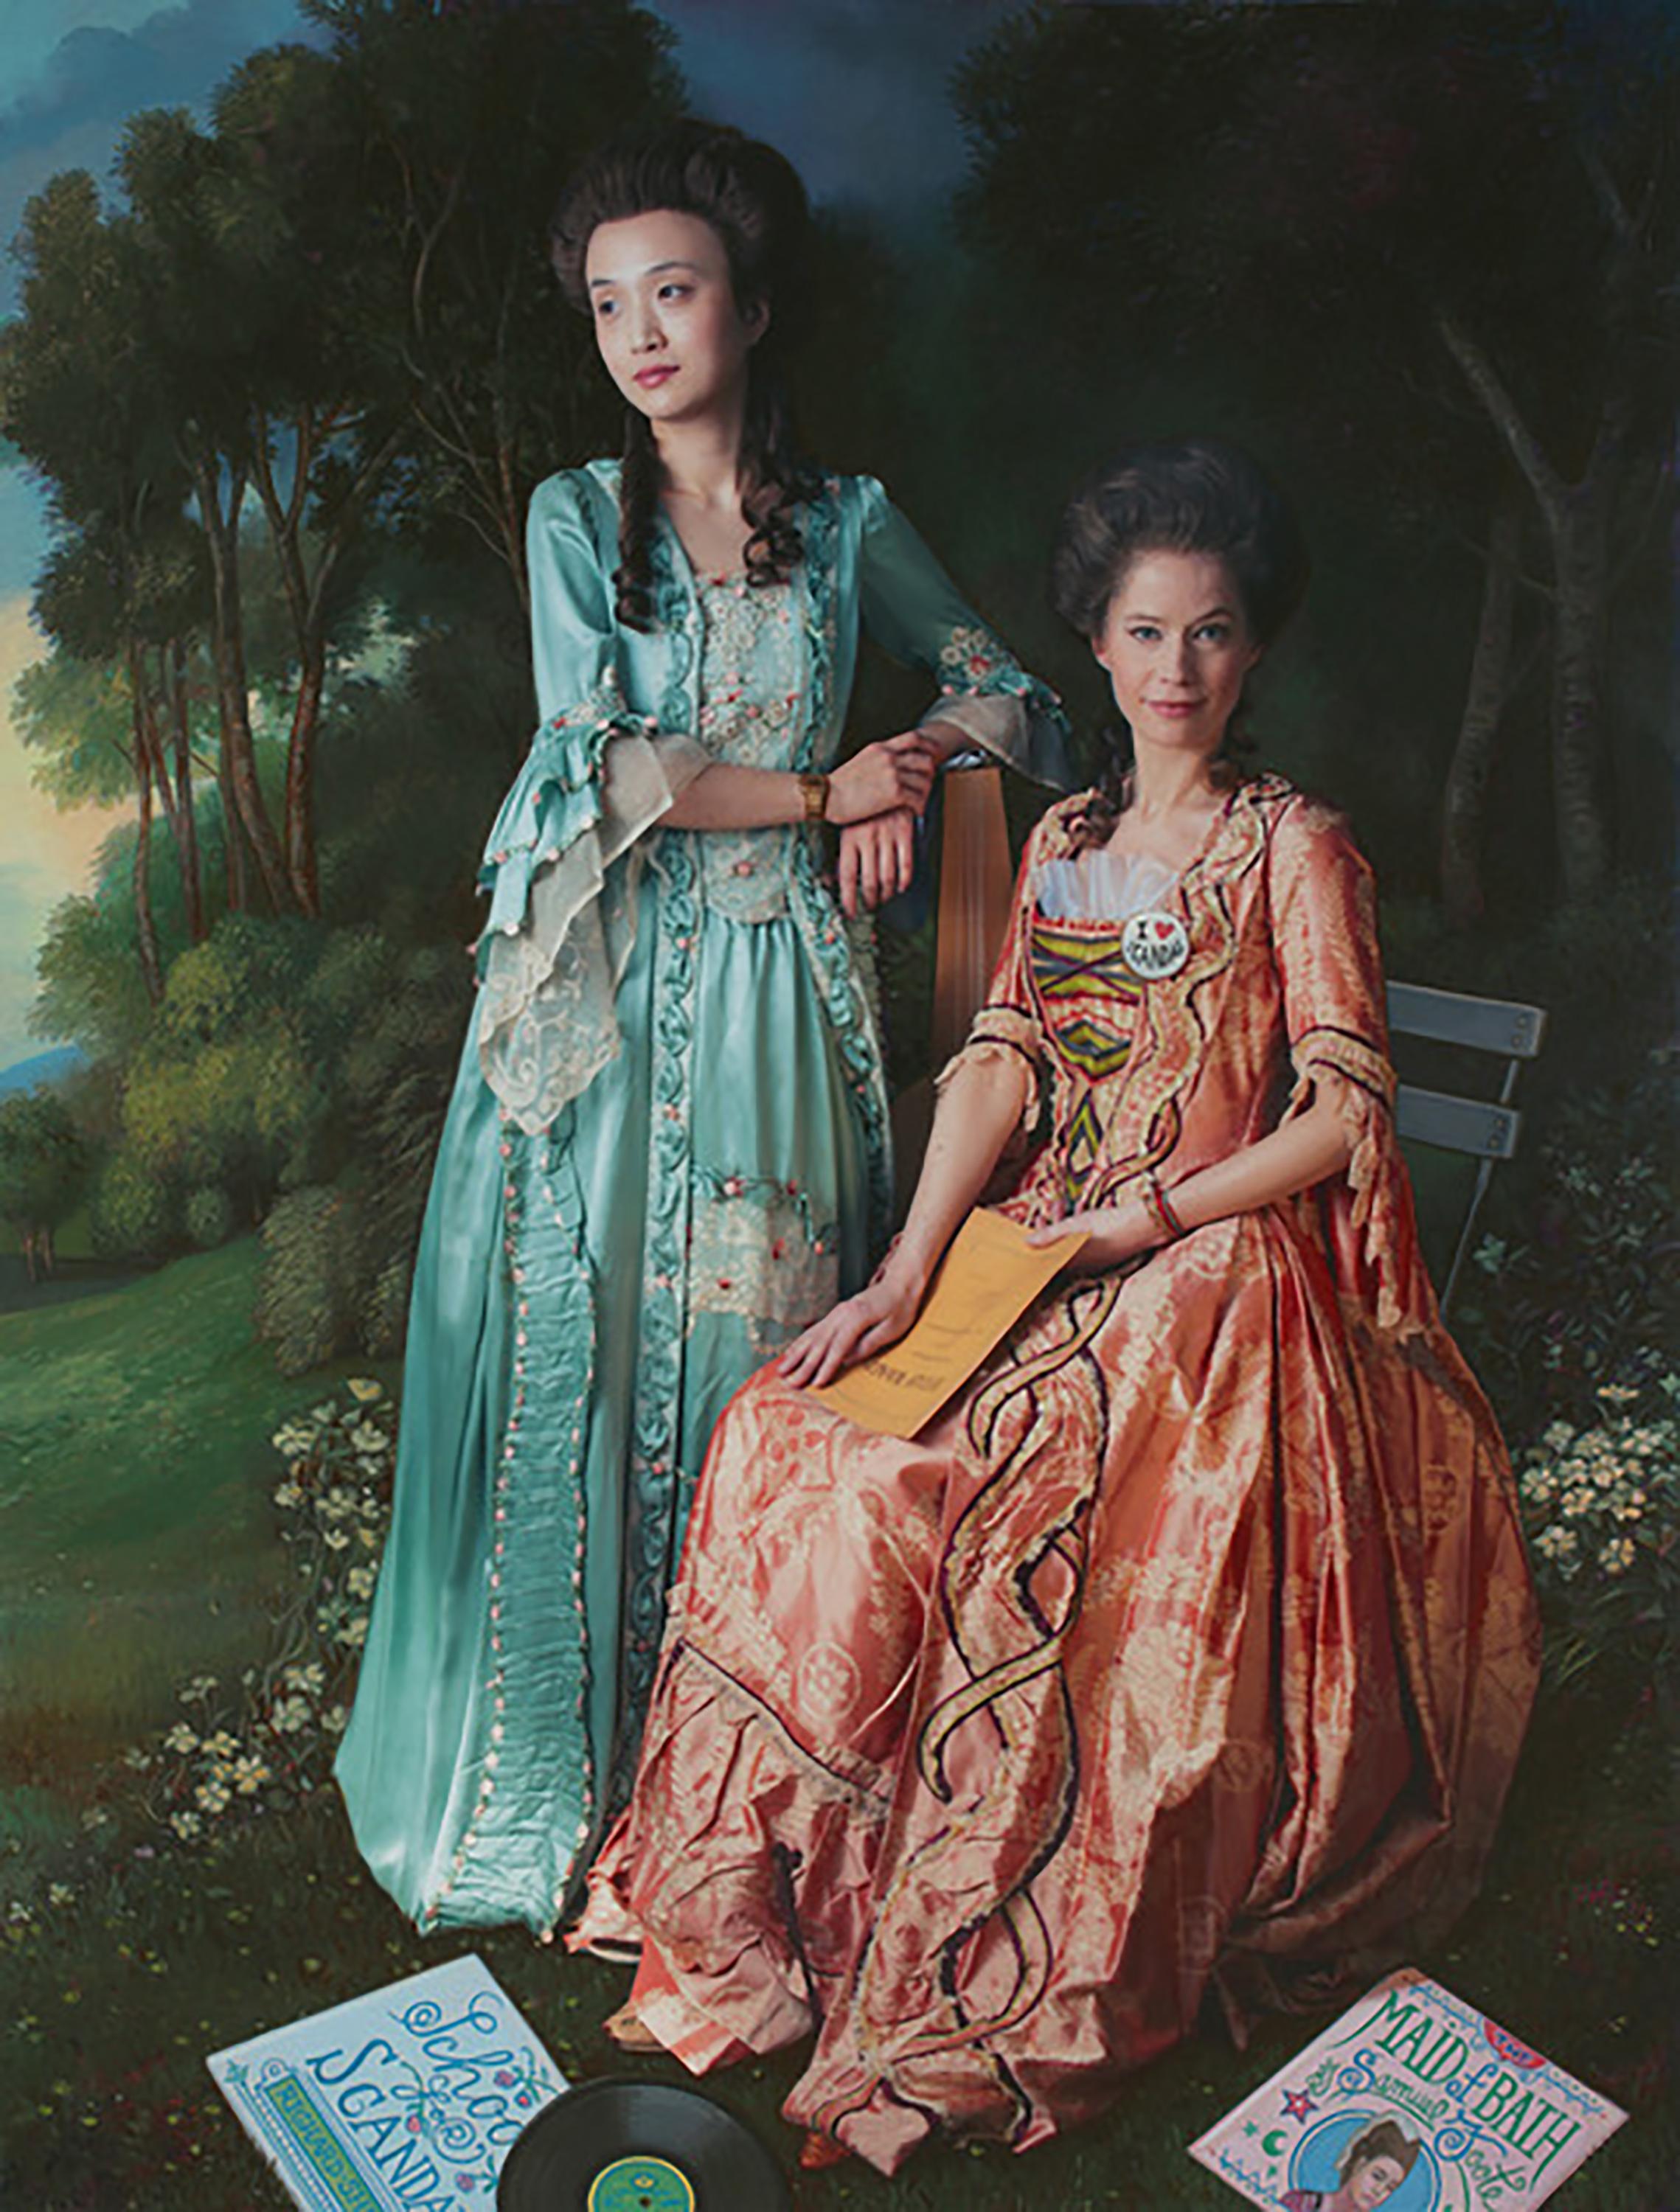 E2 - Kleinveld & Julien Portrait Photograph - Ode to Gainsborough's The Linley Sisters